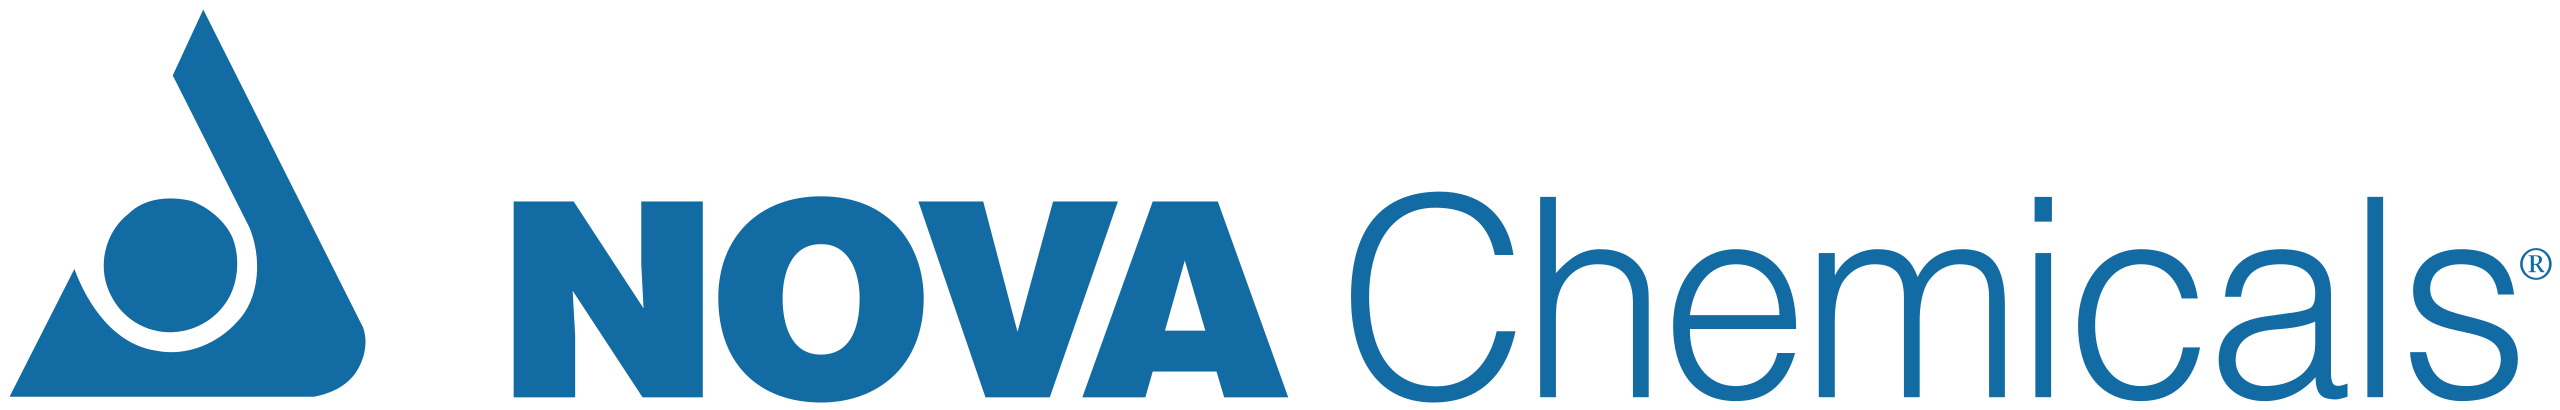 NOVA_Chemicals_logo